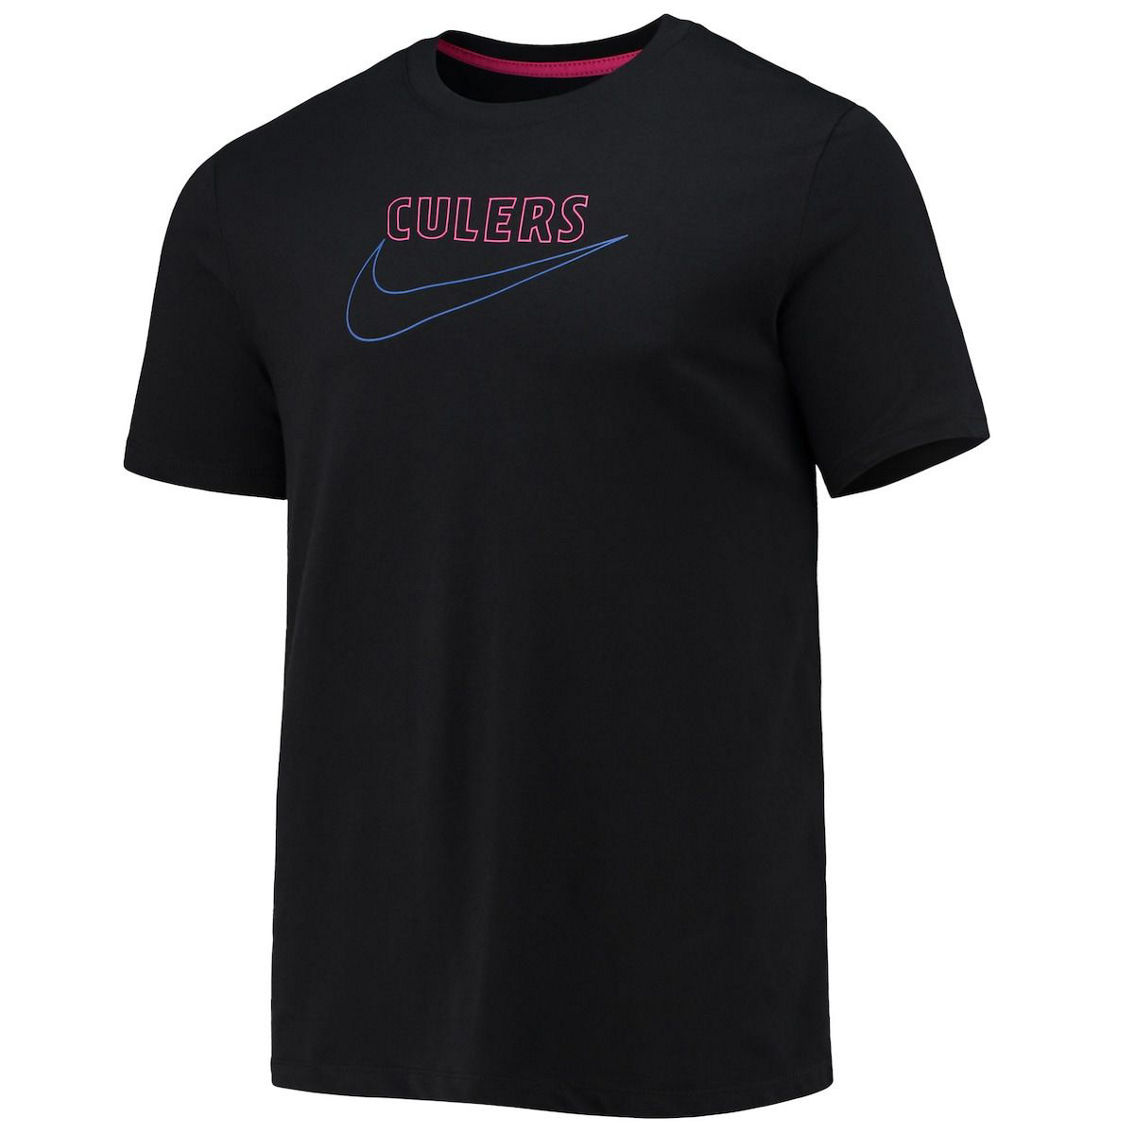 Nike Men's Black Barcelona Swoosh Club T-Shirt - Image 3 of 4